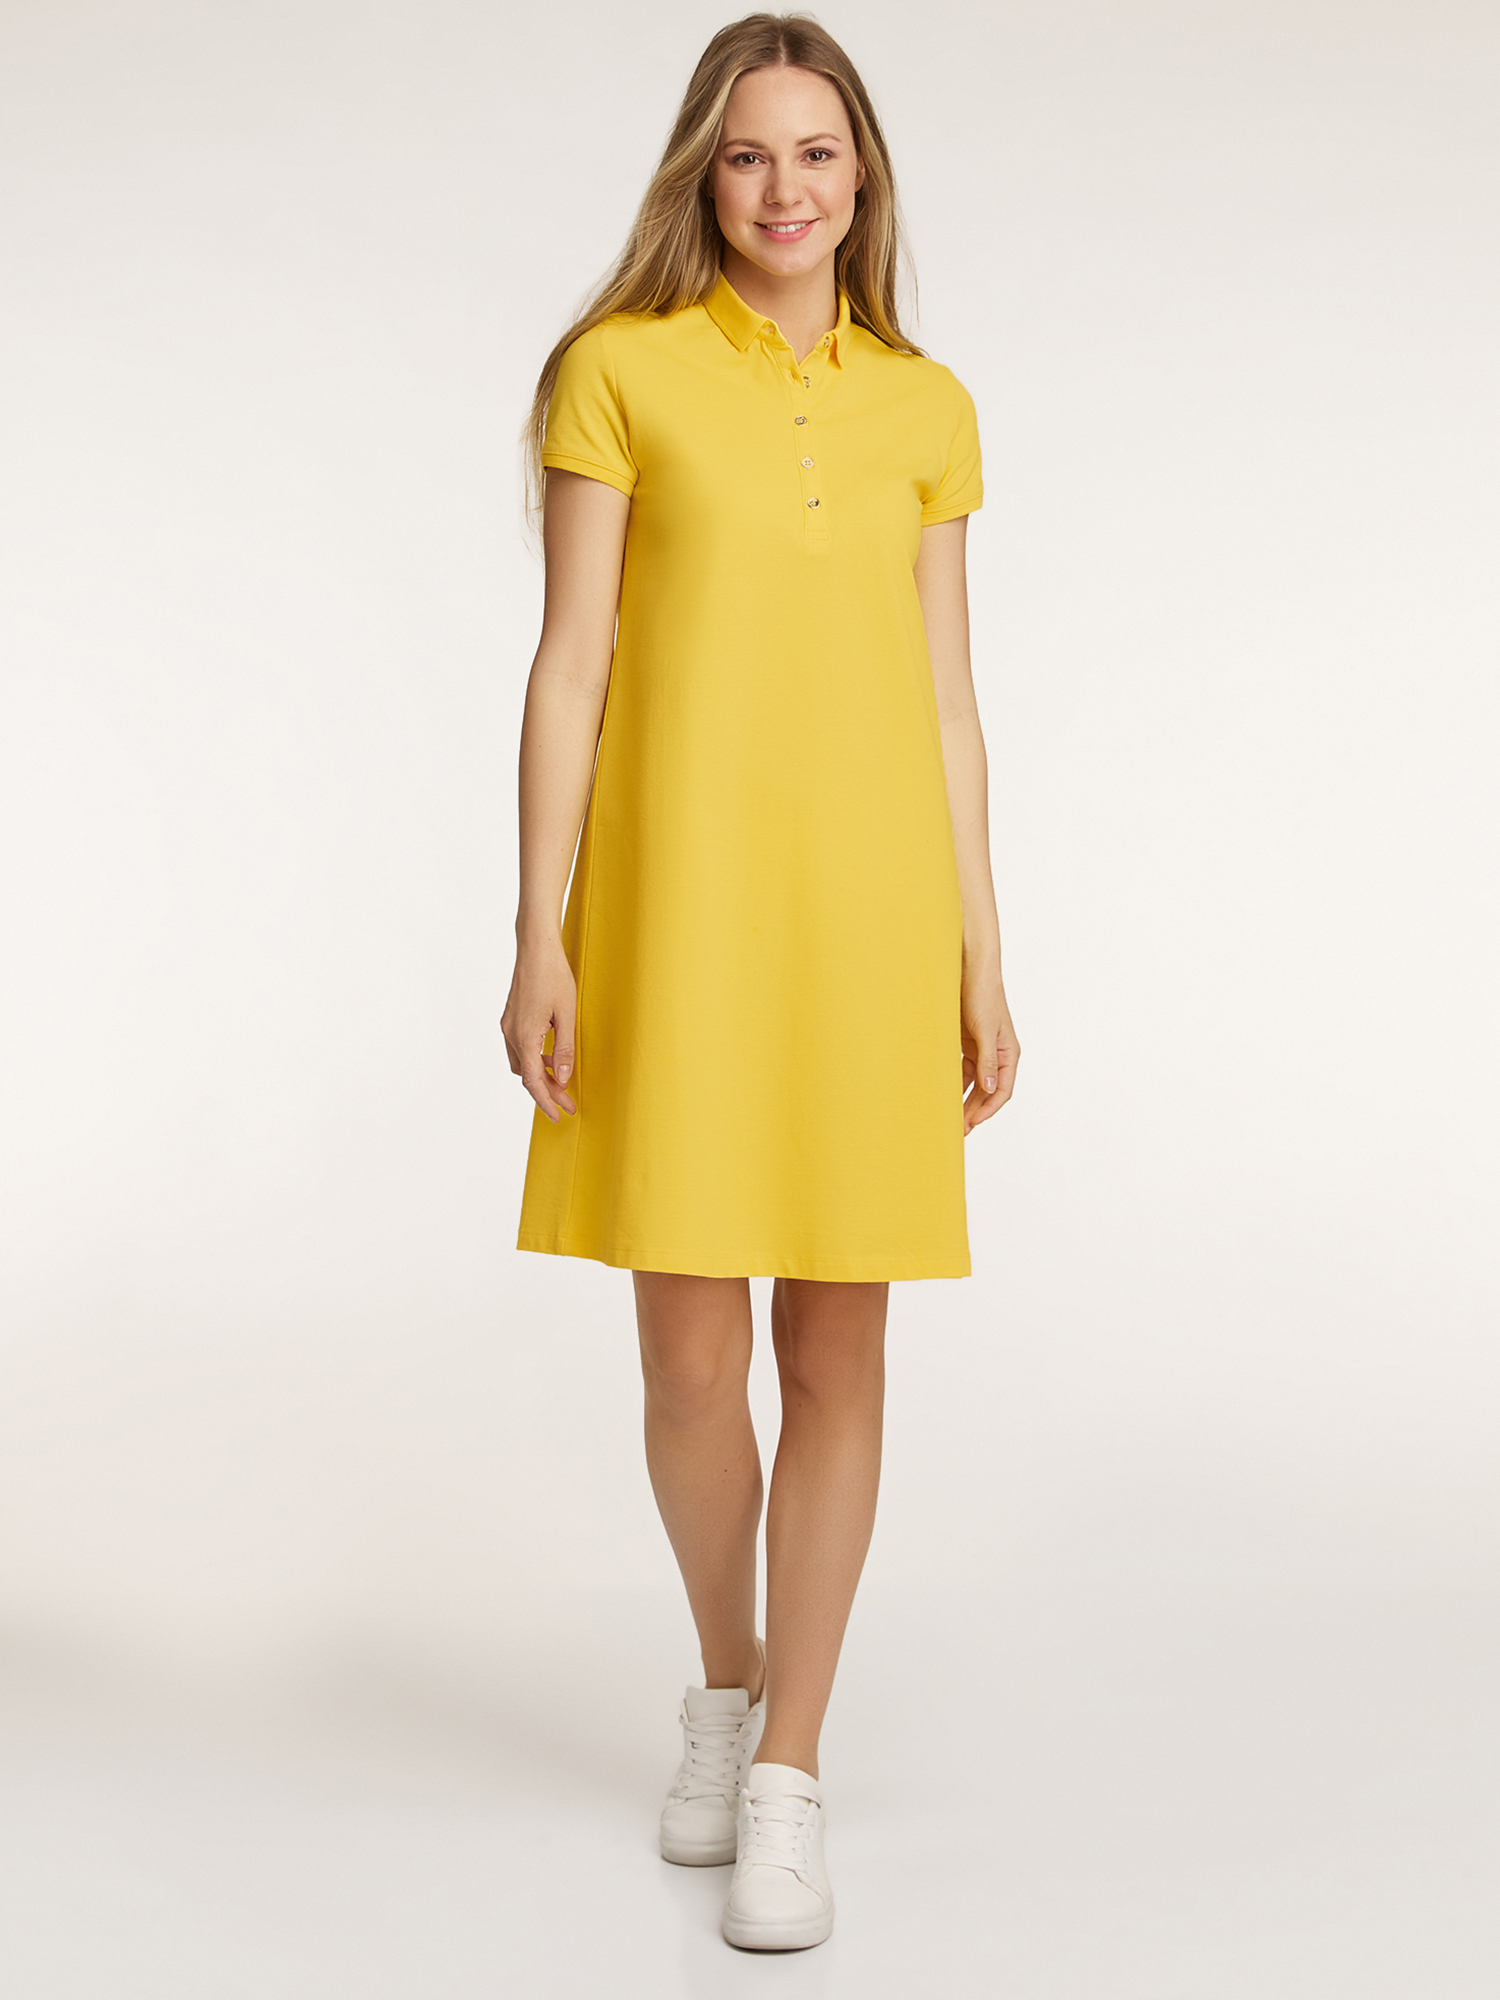 Платье женское oodji 24001118-4B желтое L